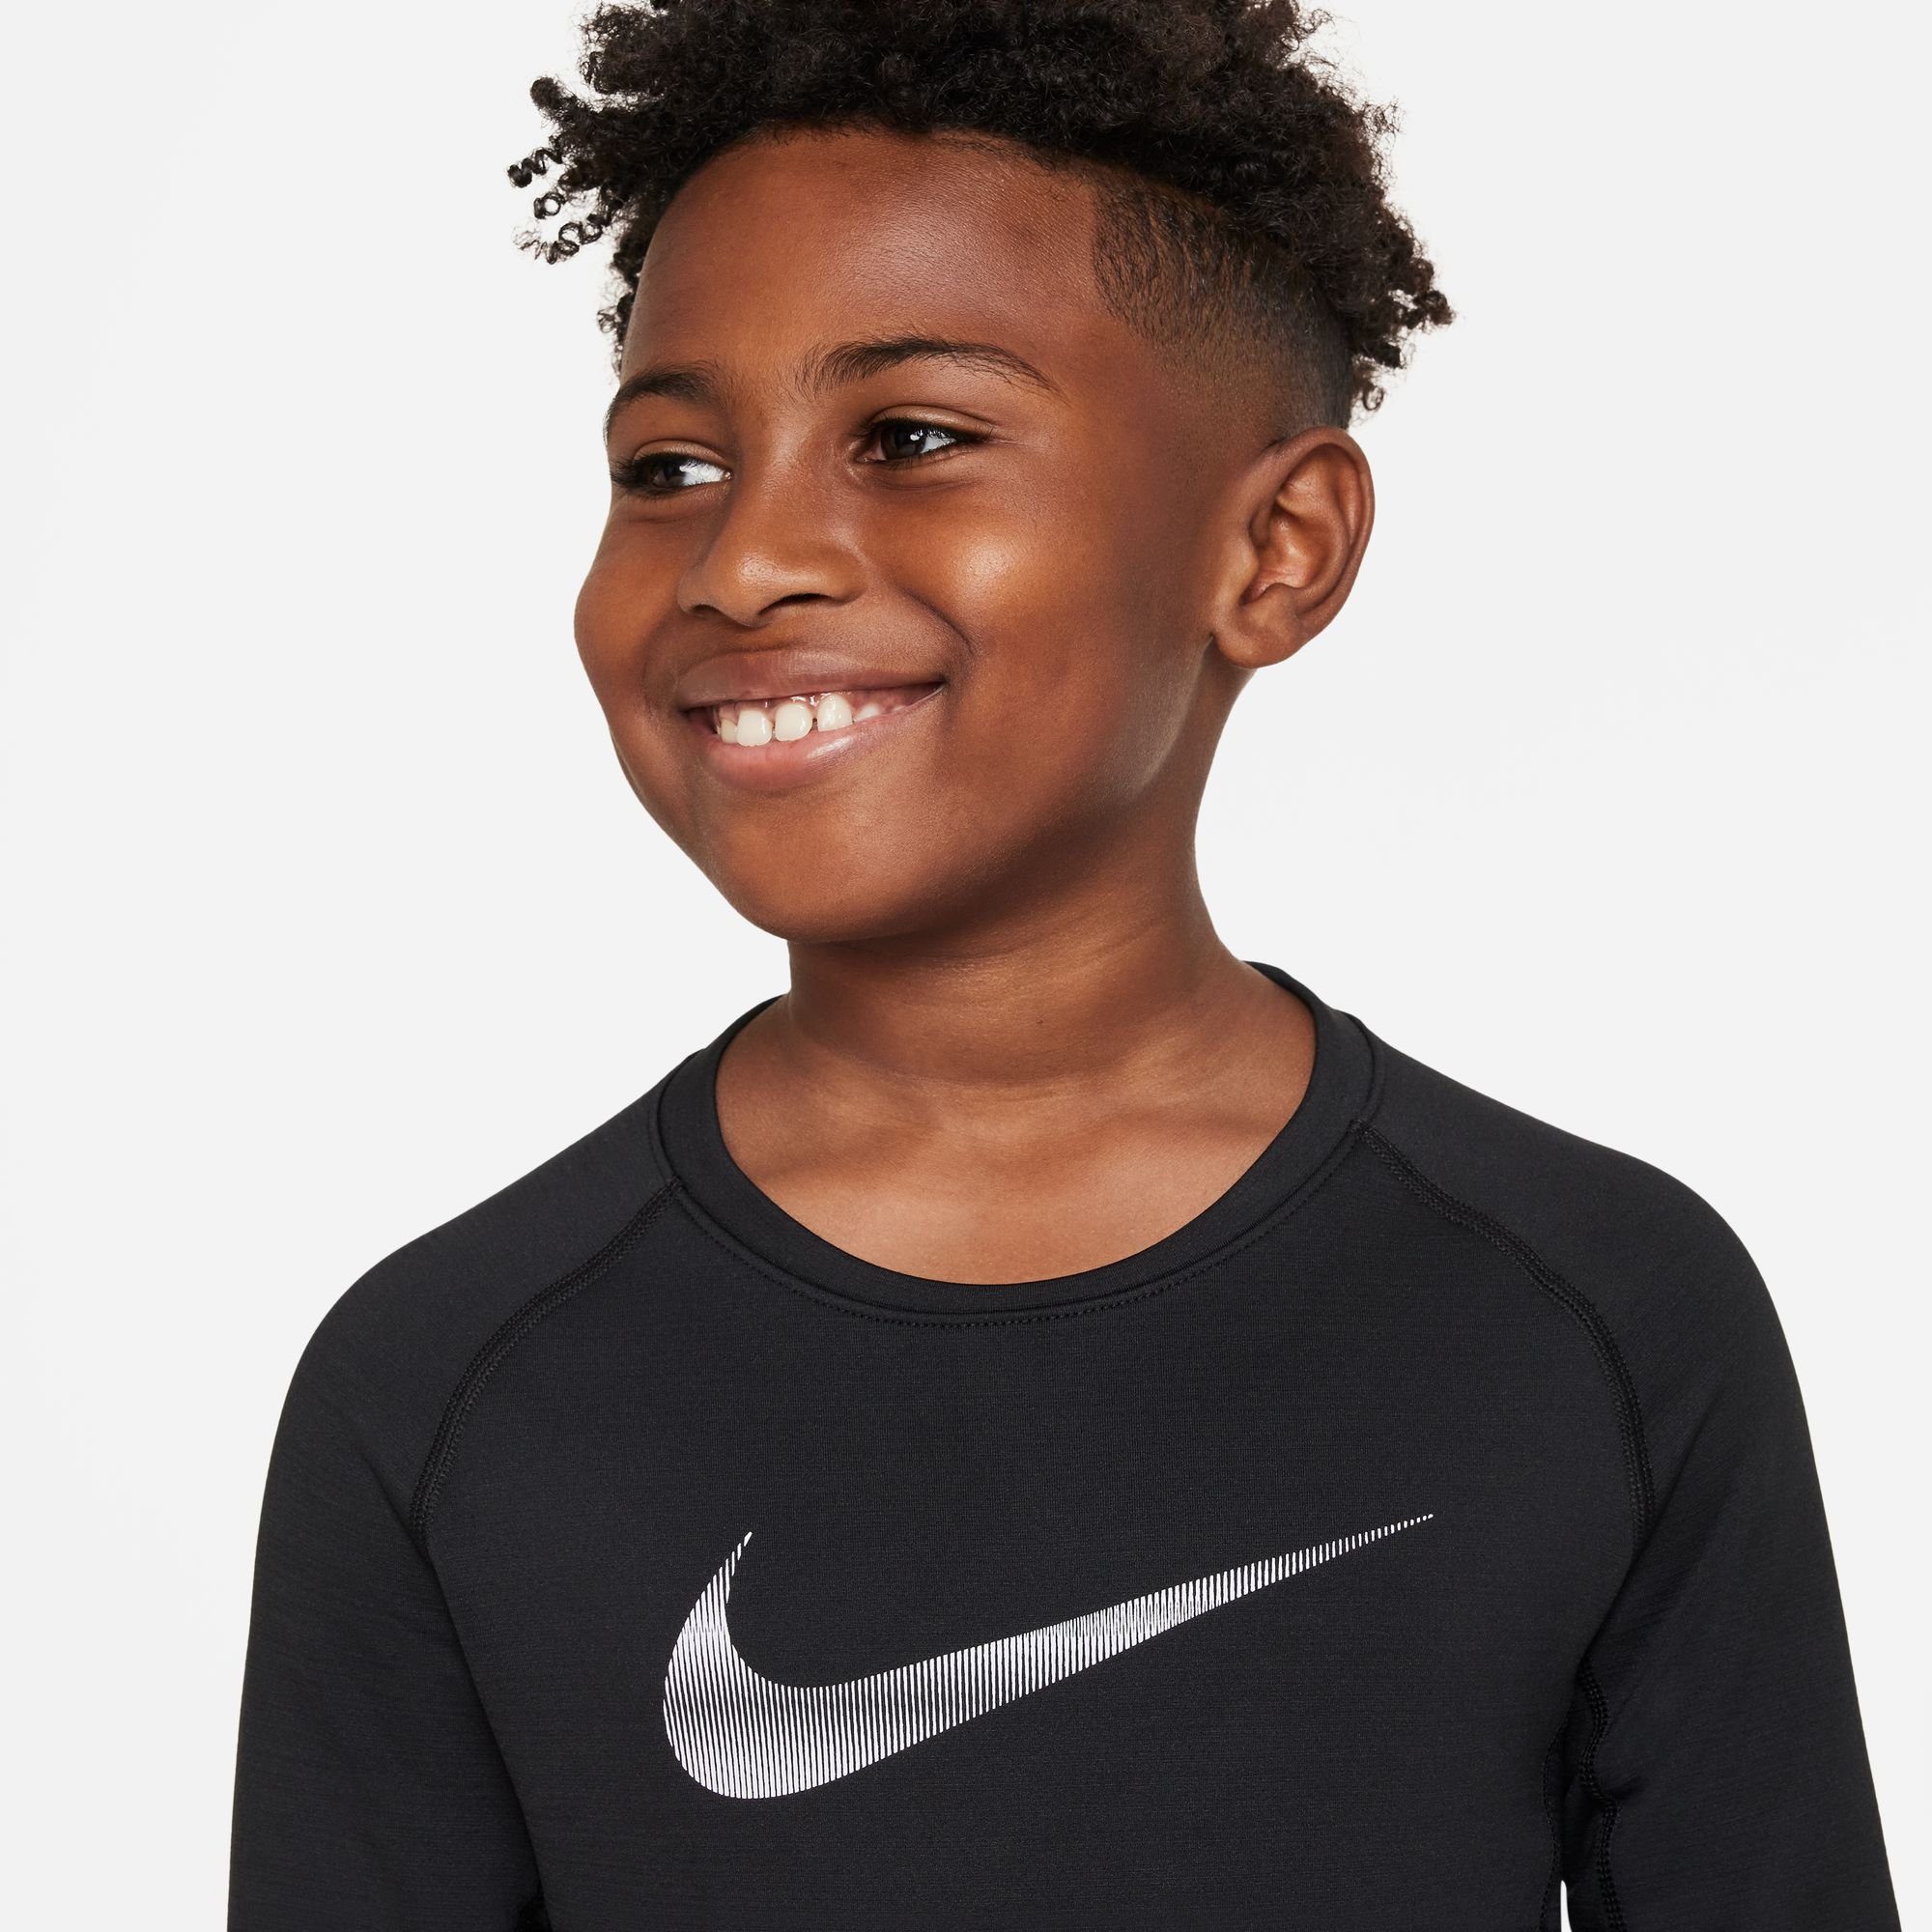 WARM PRO Trainingsshirt - (BOYS) Nike Kinder BIG TOP LONG-SLEEVE für KIDS'